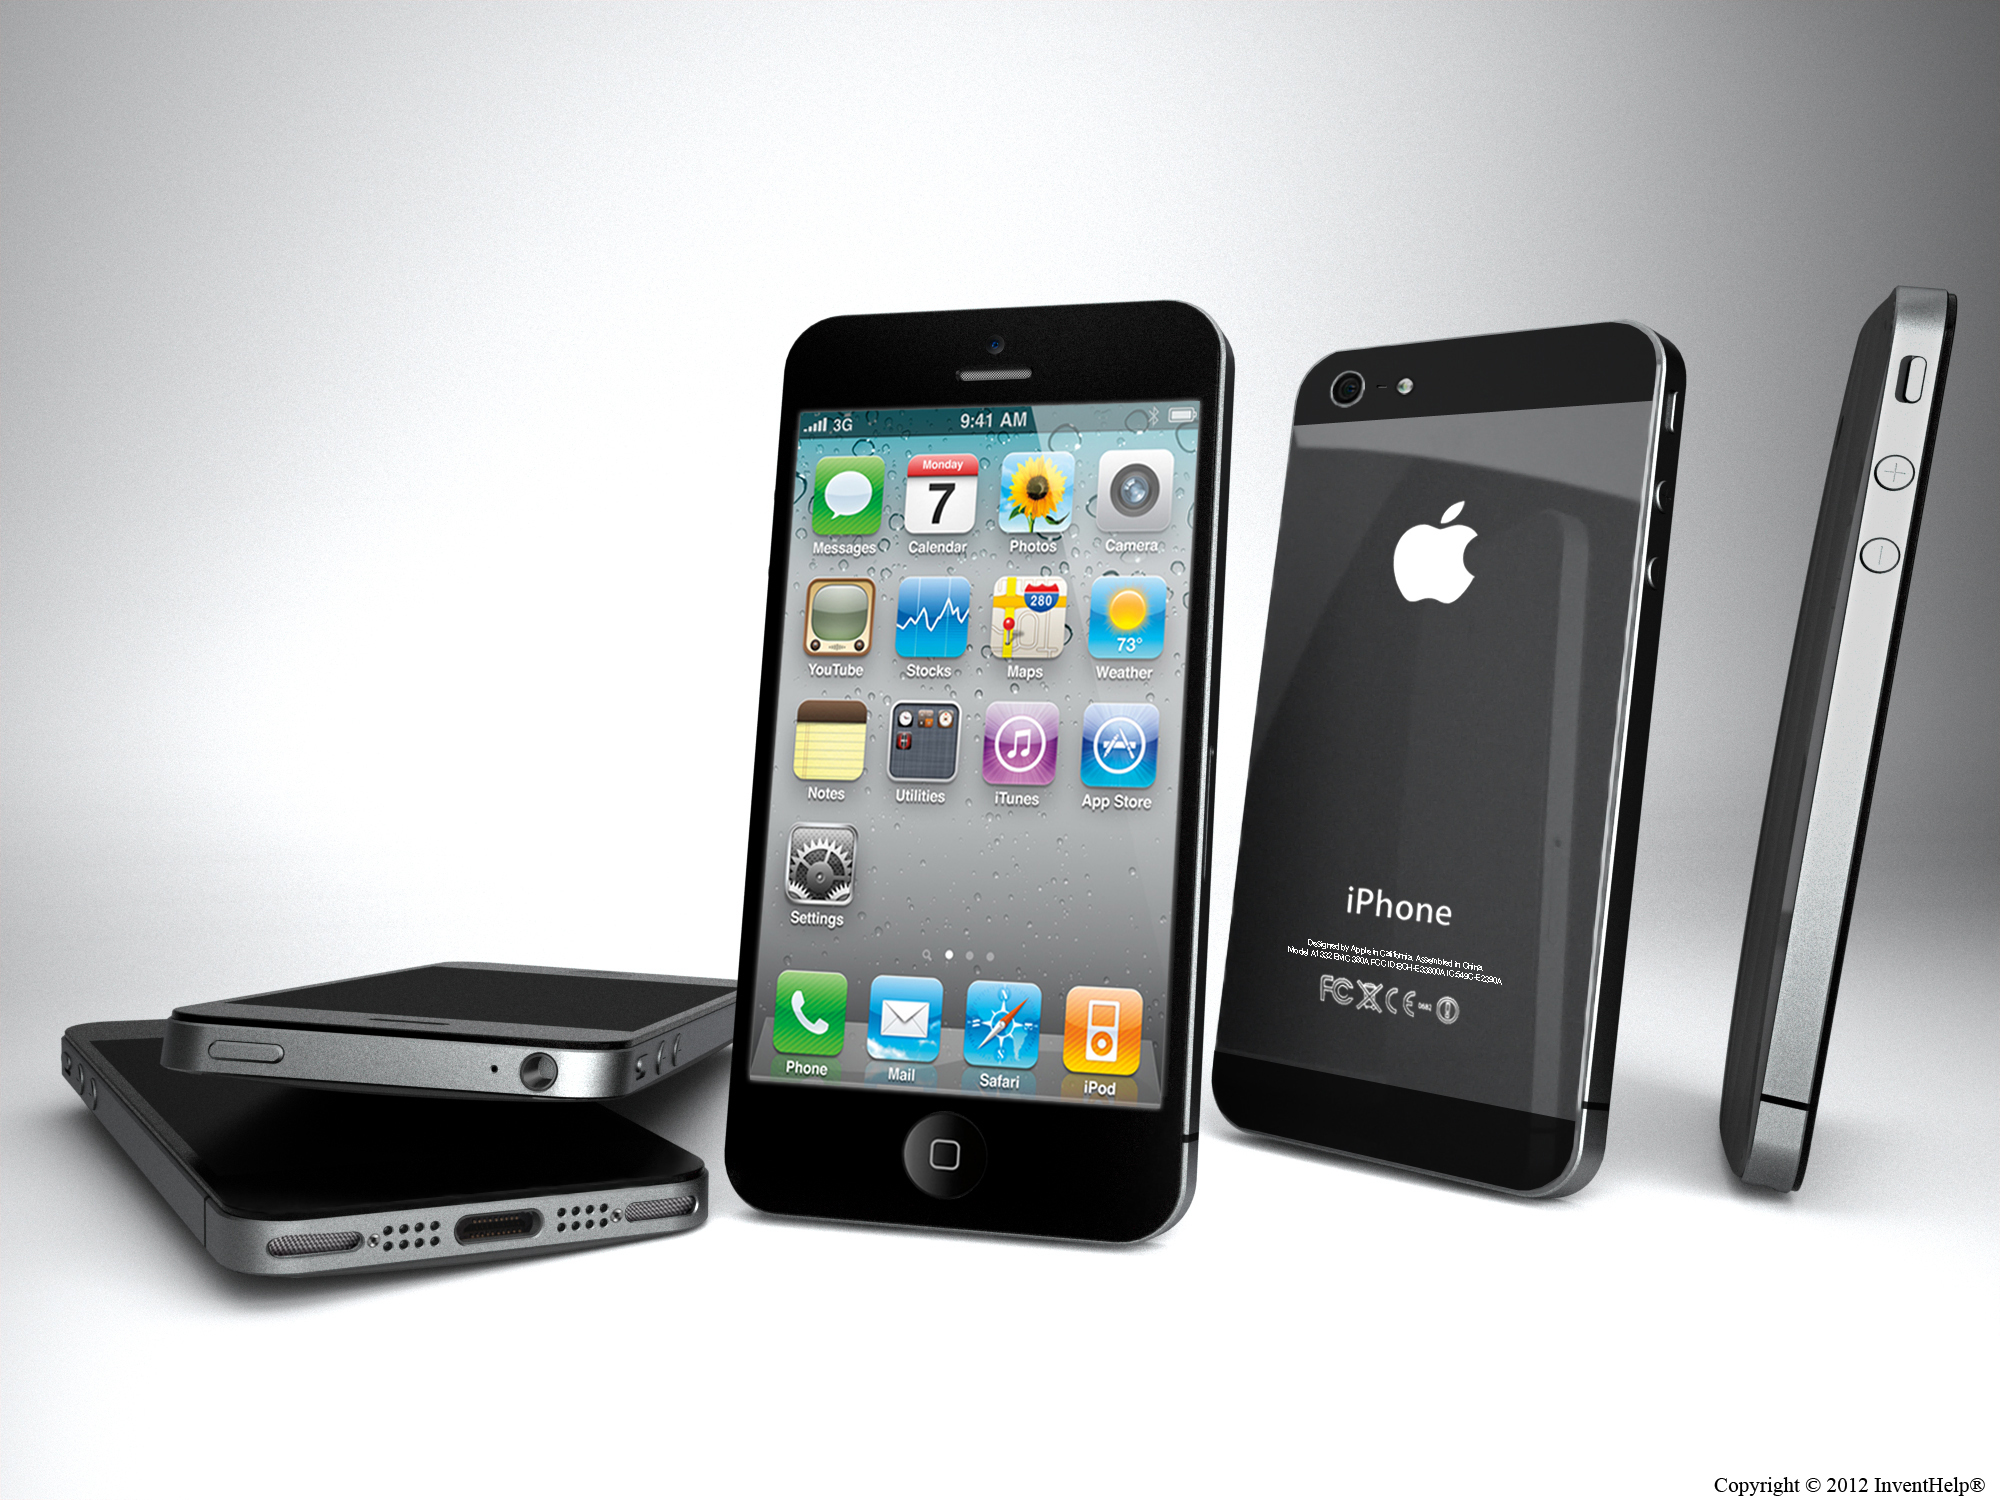 apple iphone 5s wallpaper hd,mobiltelefon,gadget,kommunikationsgerät,smartphone,tragbares kommunikationsgerät